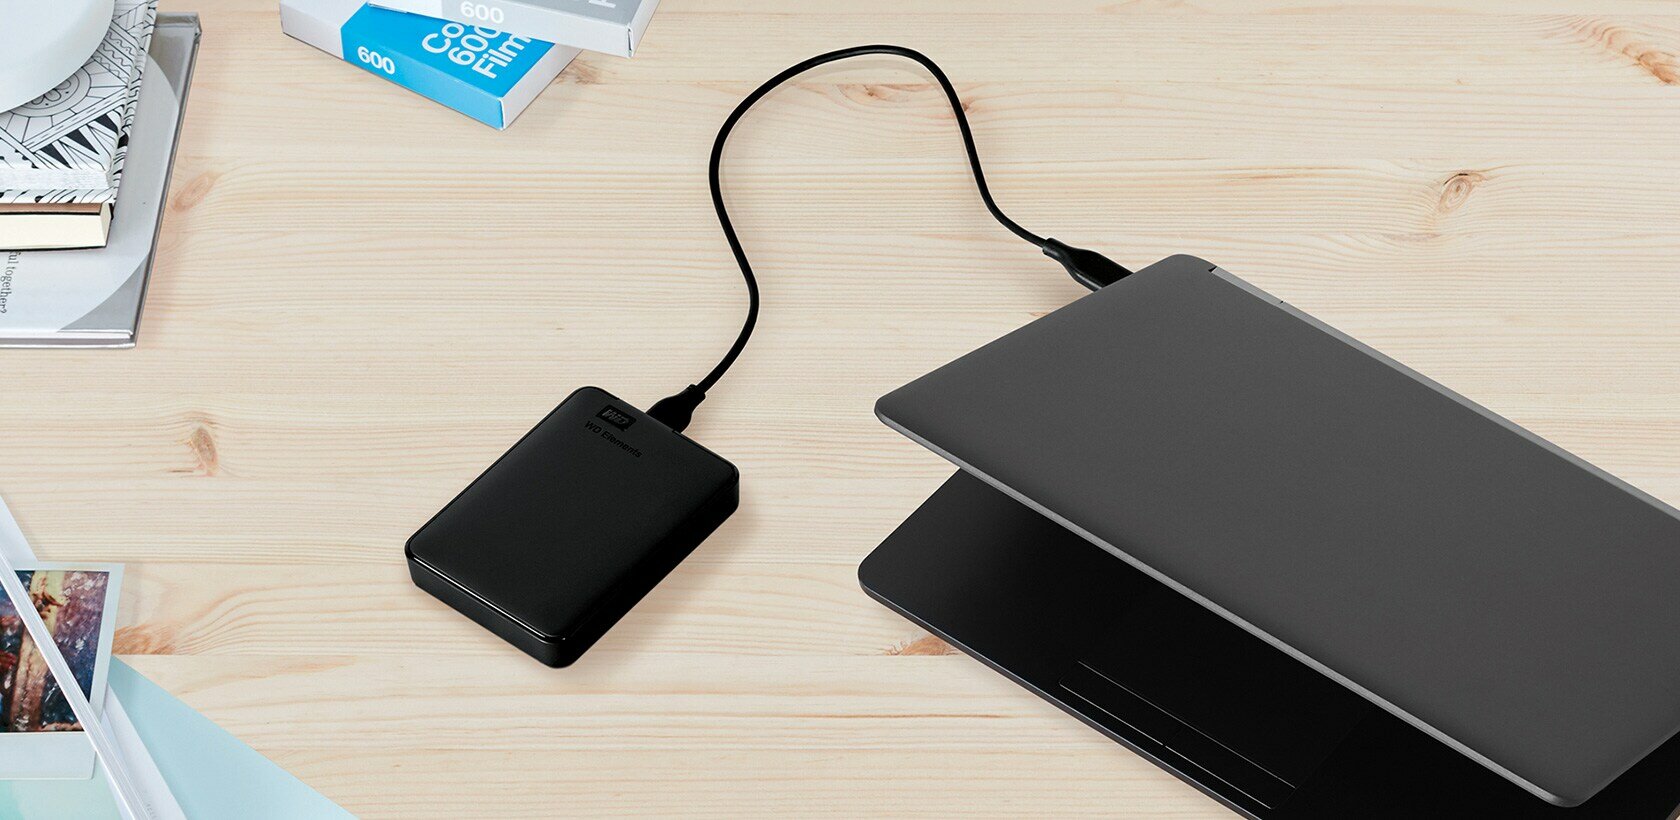 WD Elements Portable USB 3.0 External Hard Drive - SHUTTER SHOP